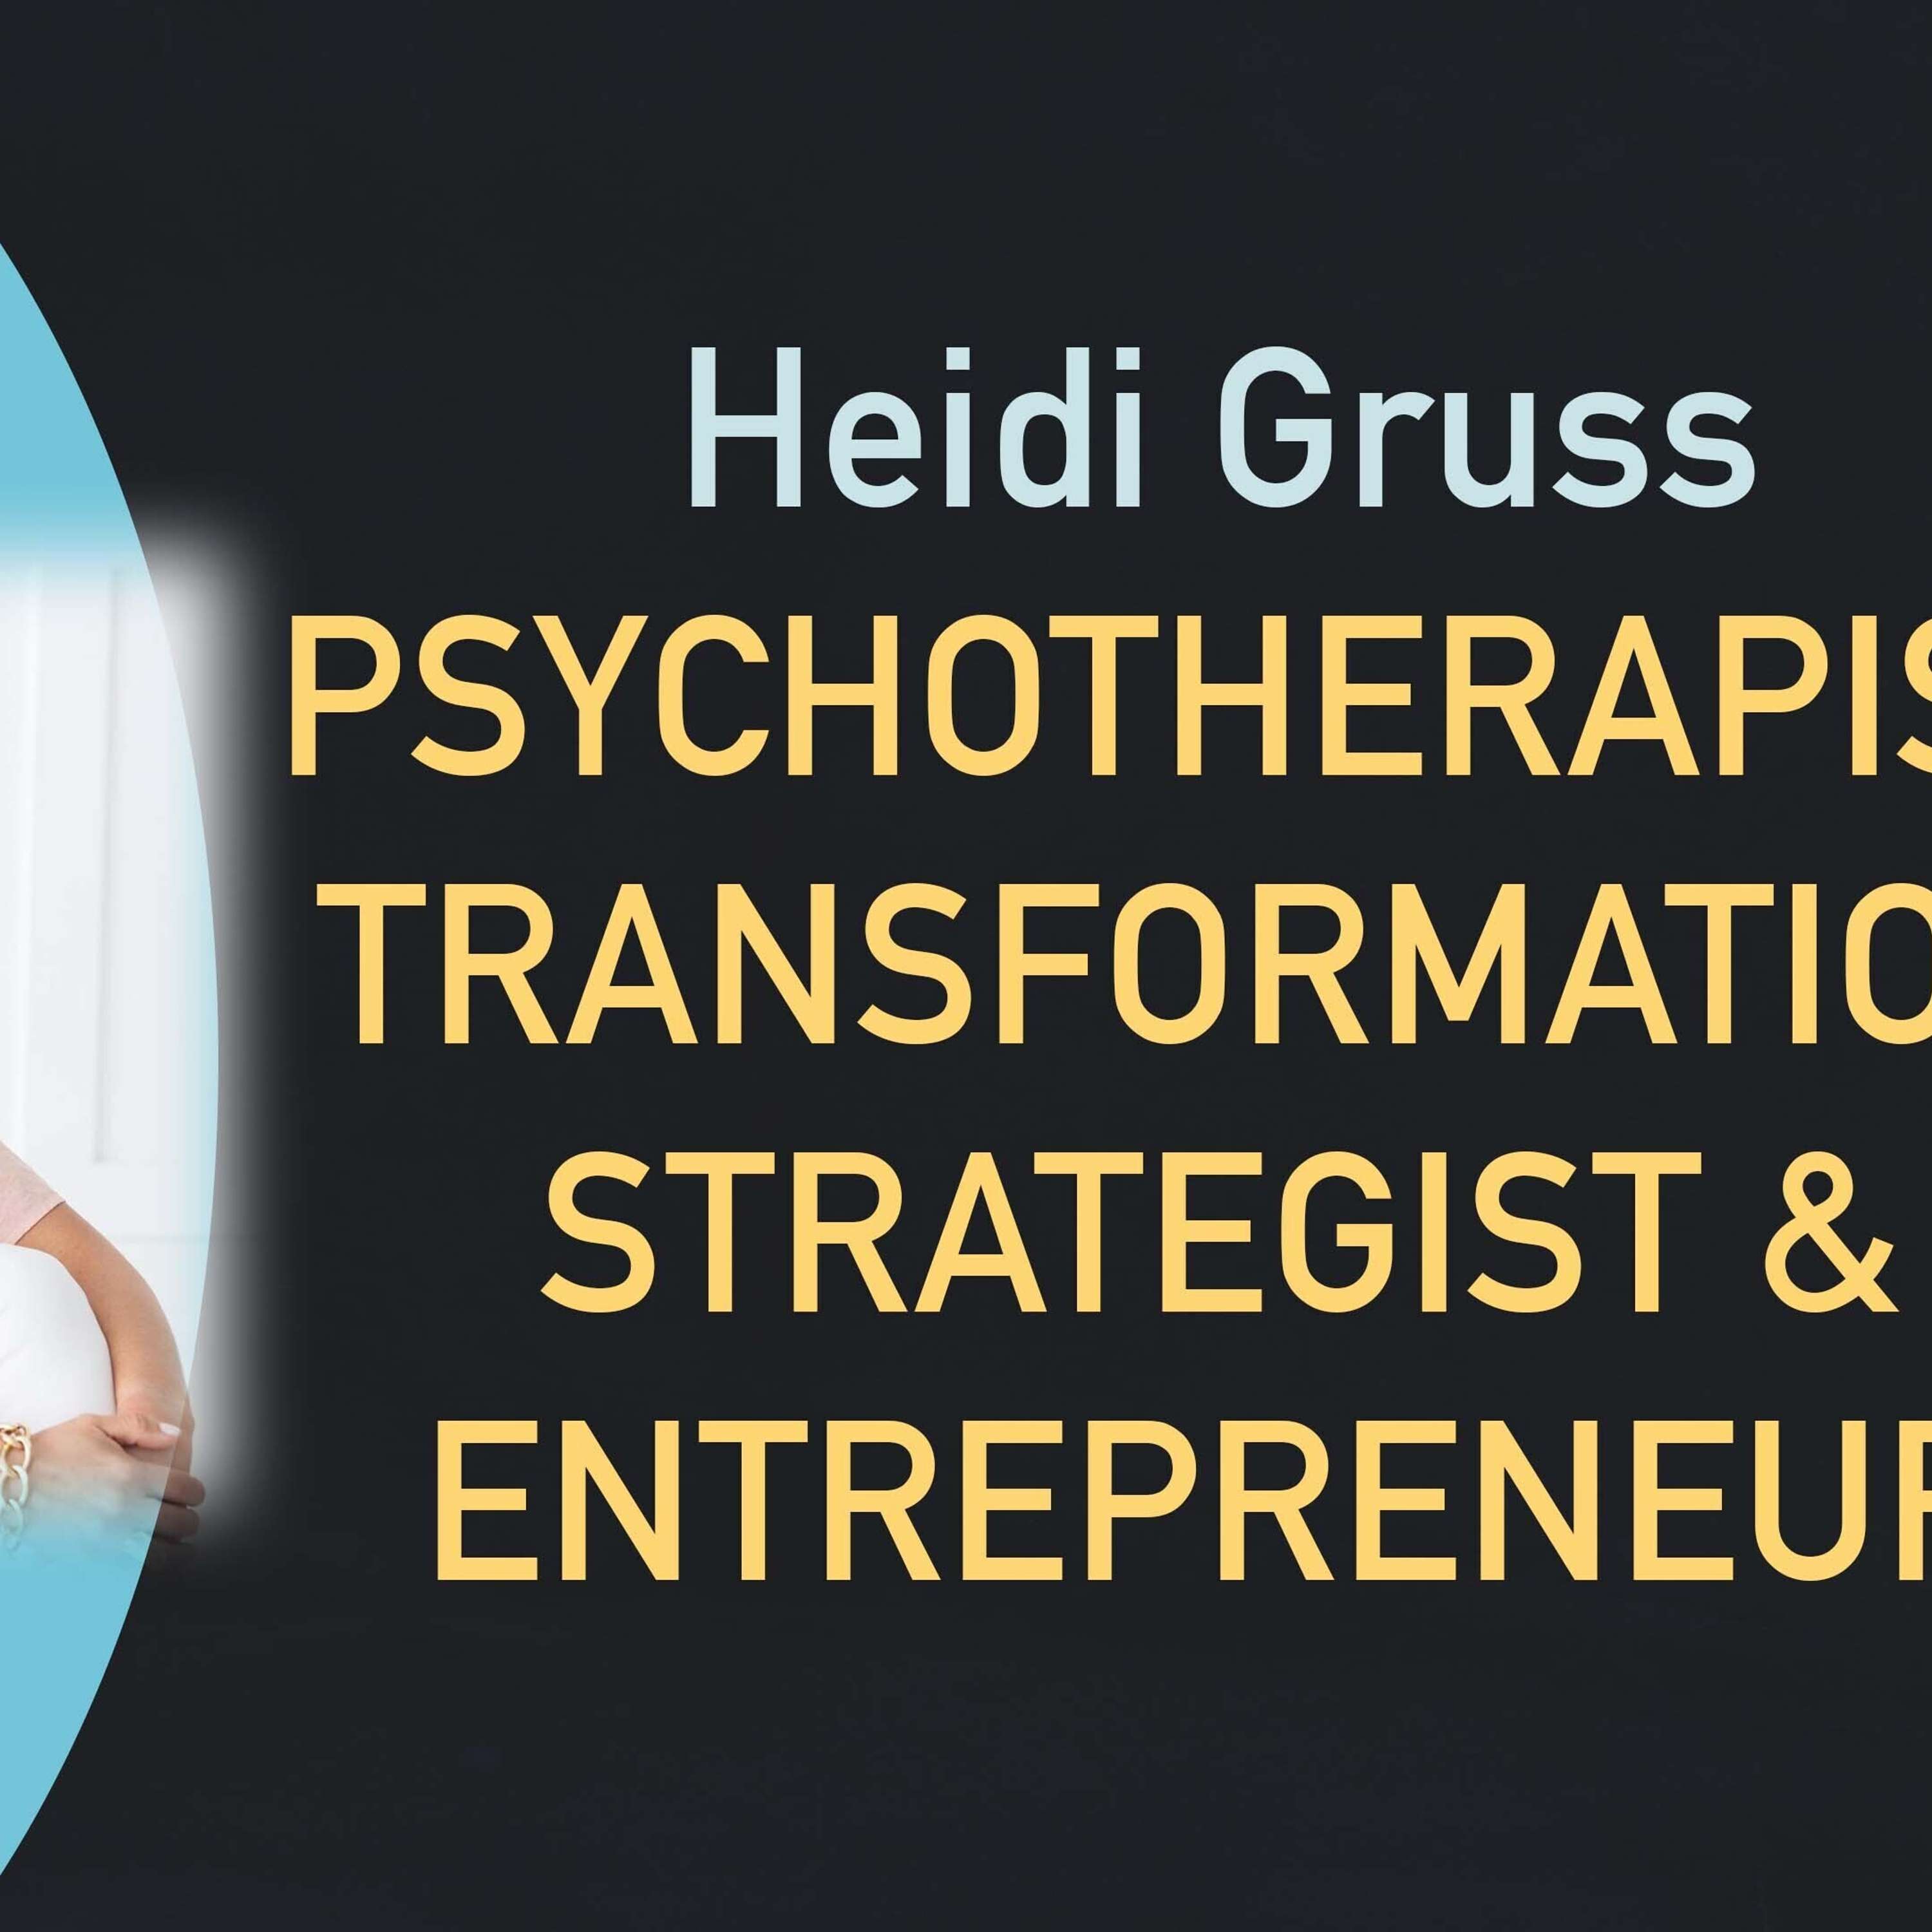 Heidi Gruss - Psychotherapist, Transformation Strategist and Entrepreneur